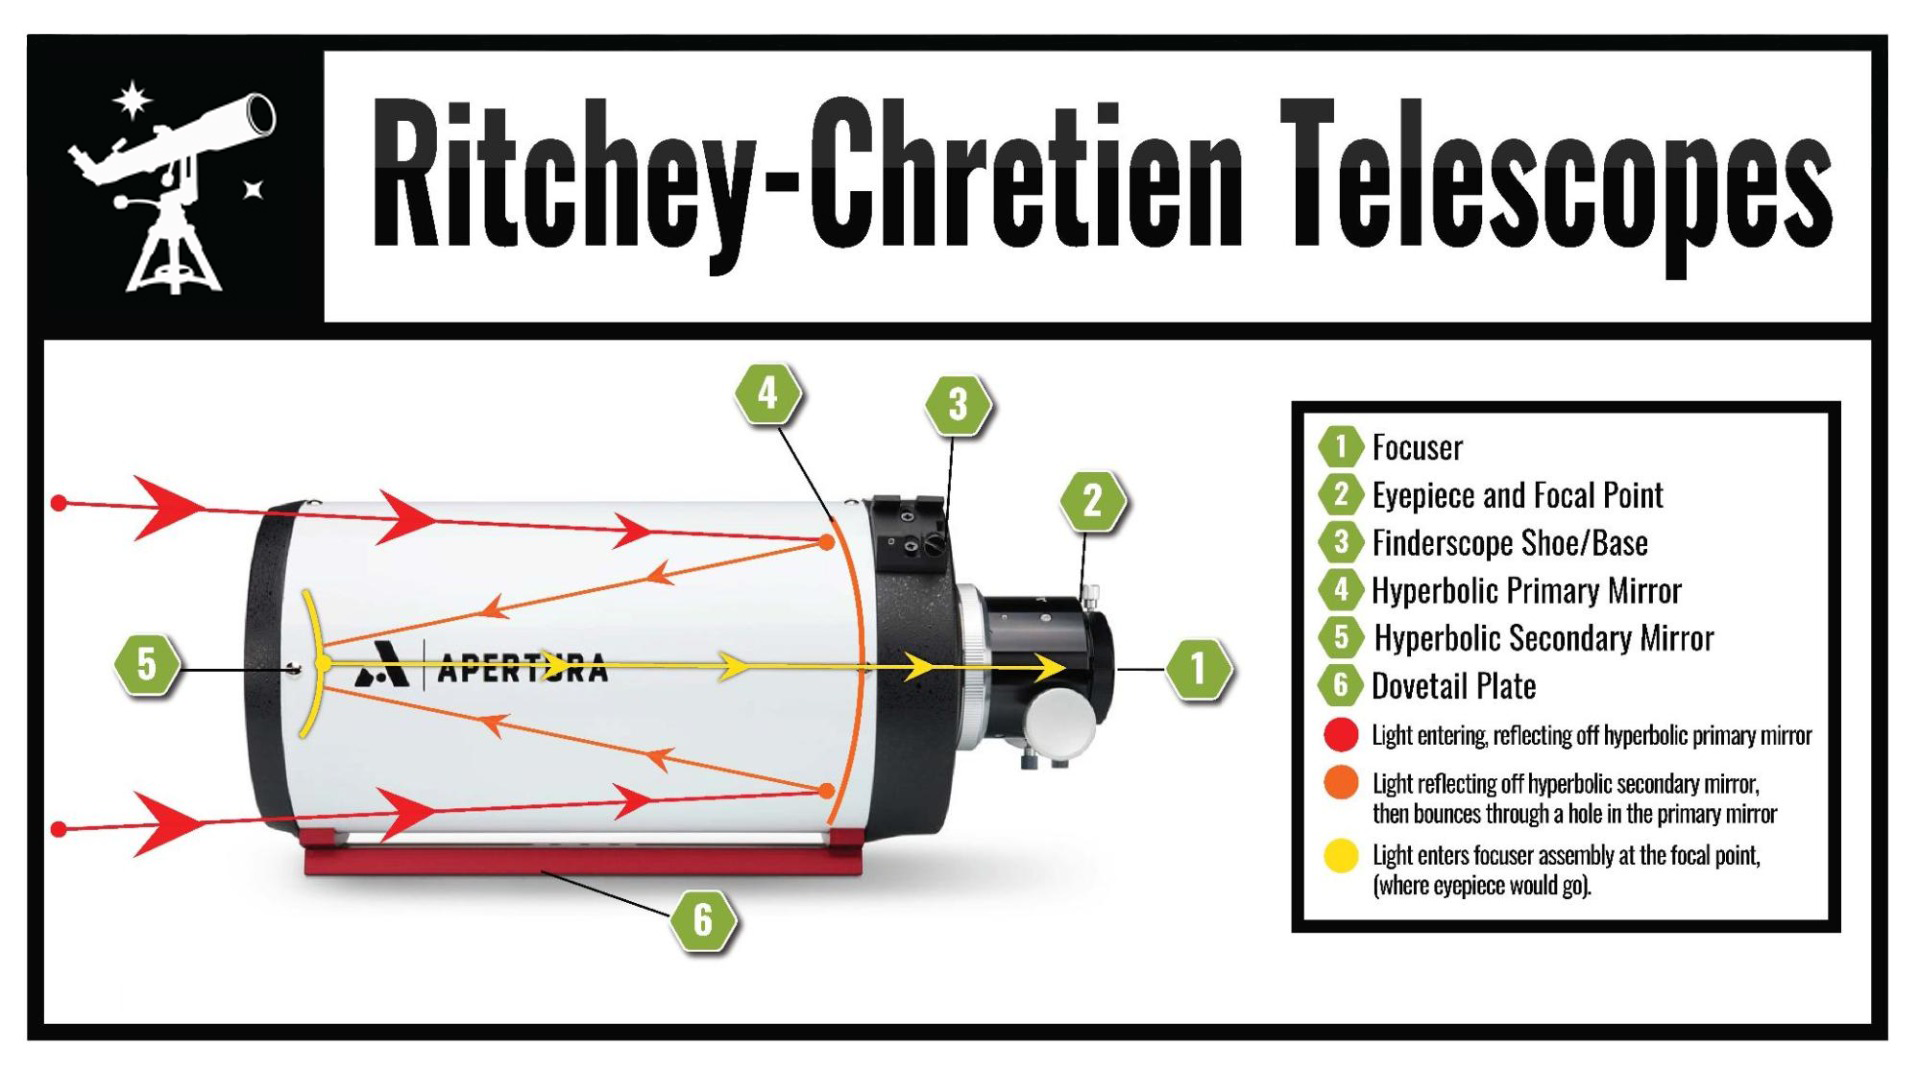 Ritchey-Chretien Telescopes